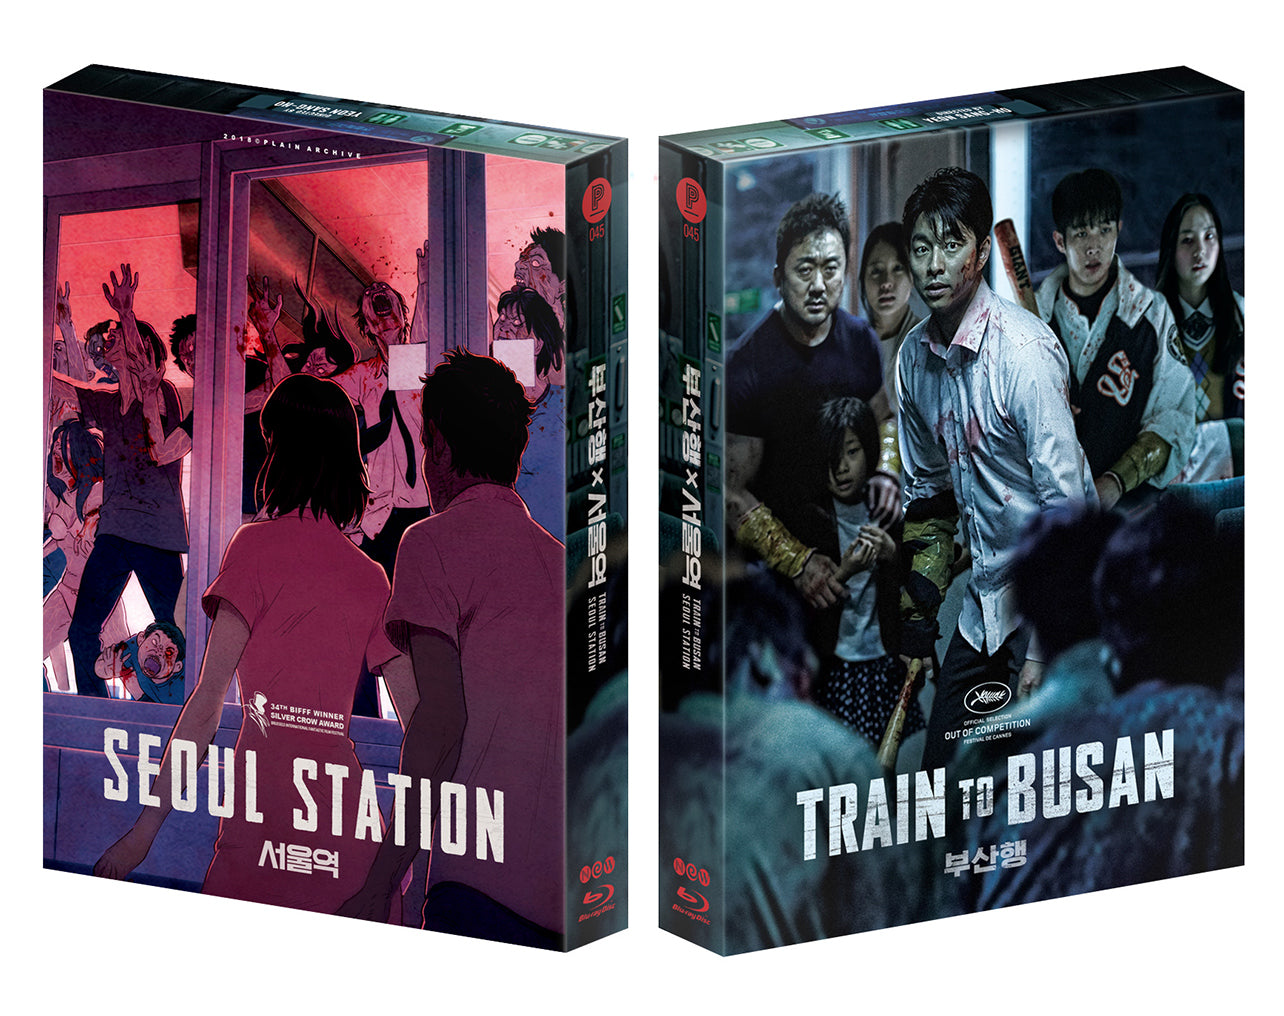 Train to Busan × Seoul Station Steelbook: Triple Pack (Full Slip A+B+C)